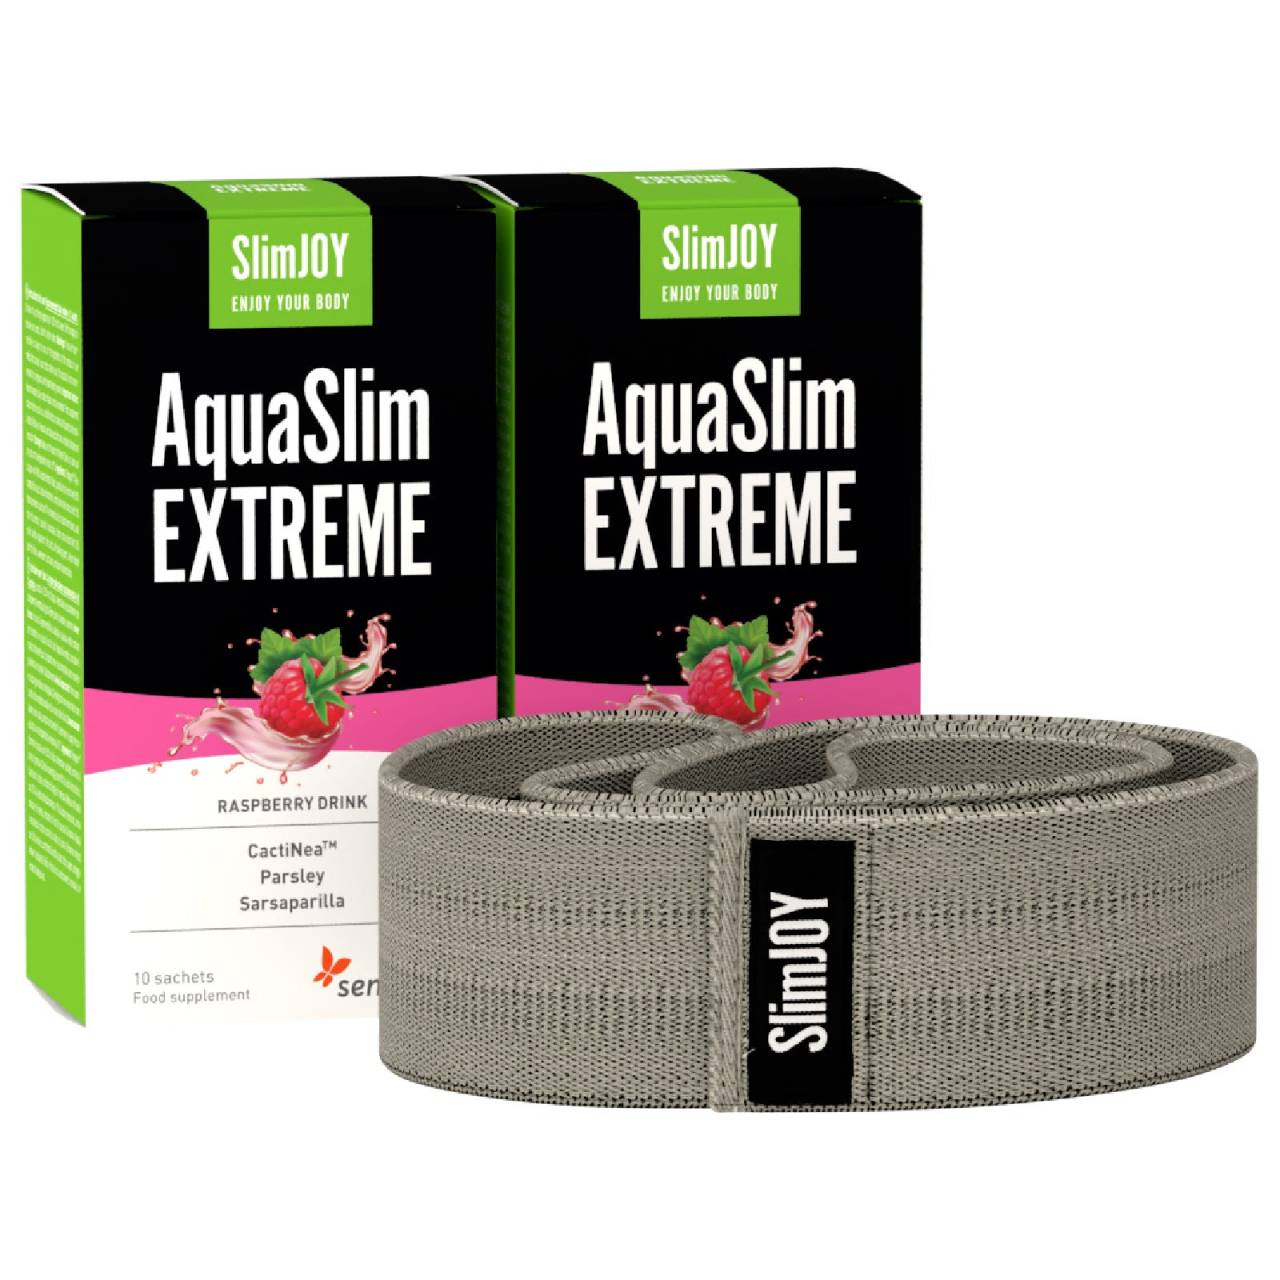 AquaSlim EXTREME 1+1 GRATIS + Banda elástica gris GRATIS.